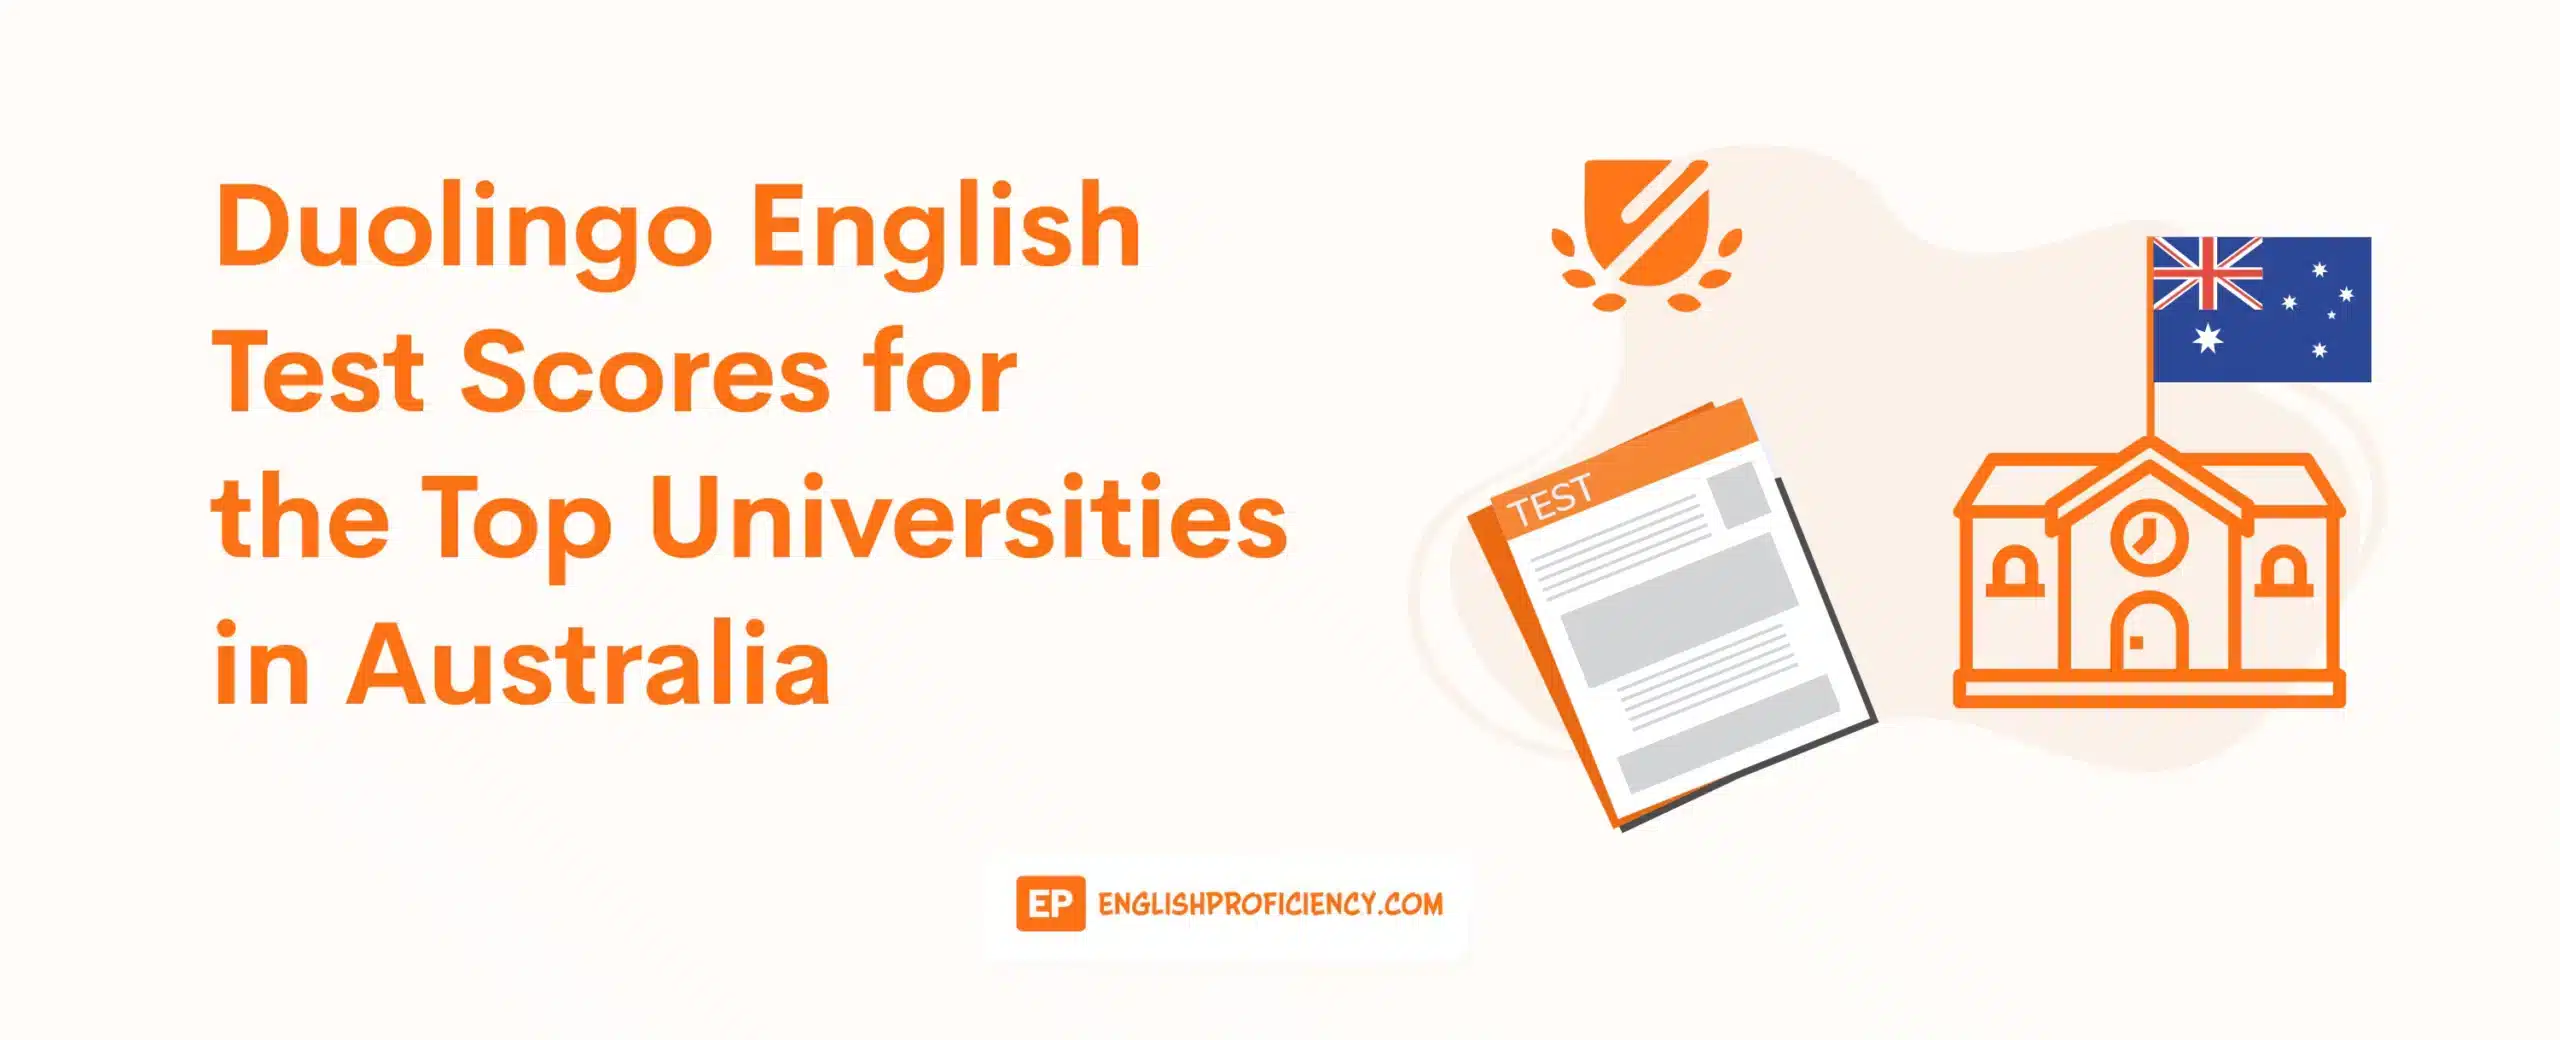 Duolingo English Test Scores for the Top Universities in Australia